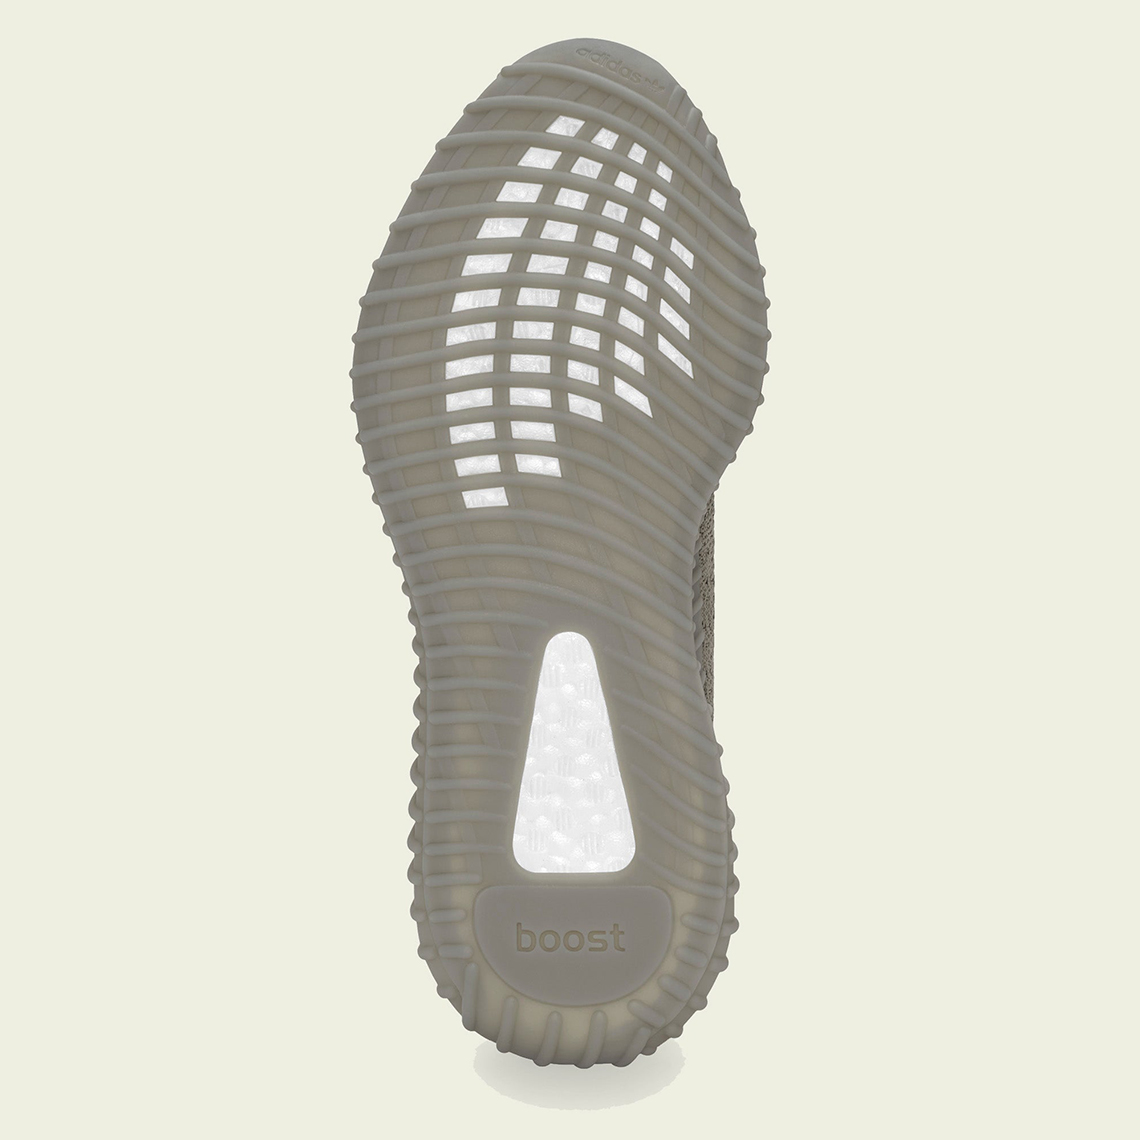 adidas Yeezy Boost 350 v2 Granite HQ2059 Store List | SneakerNews.com